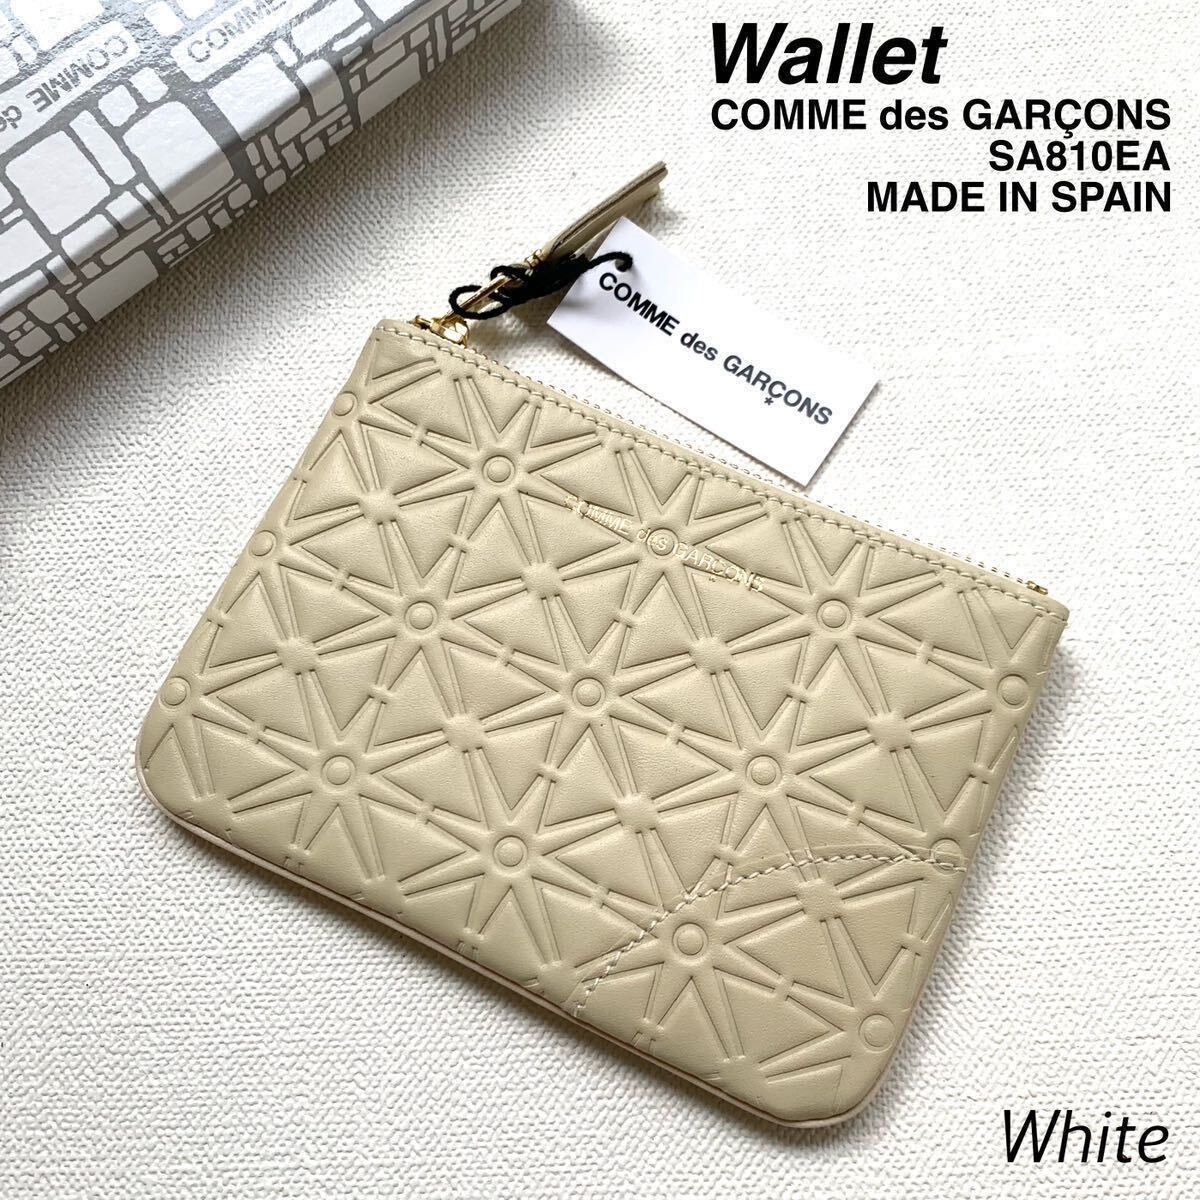  new goods Comme des Garcons wallet coin case purse SA810EA Zip pouch Wallet COMME des GARCONS SA8100 EMBOSSED WHITEen Boss 